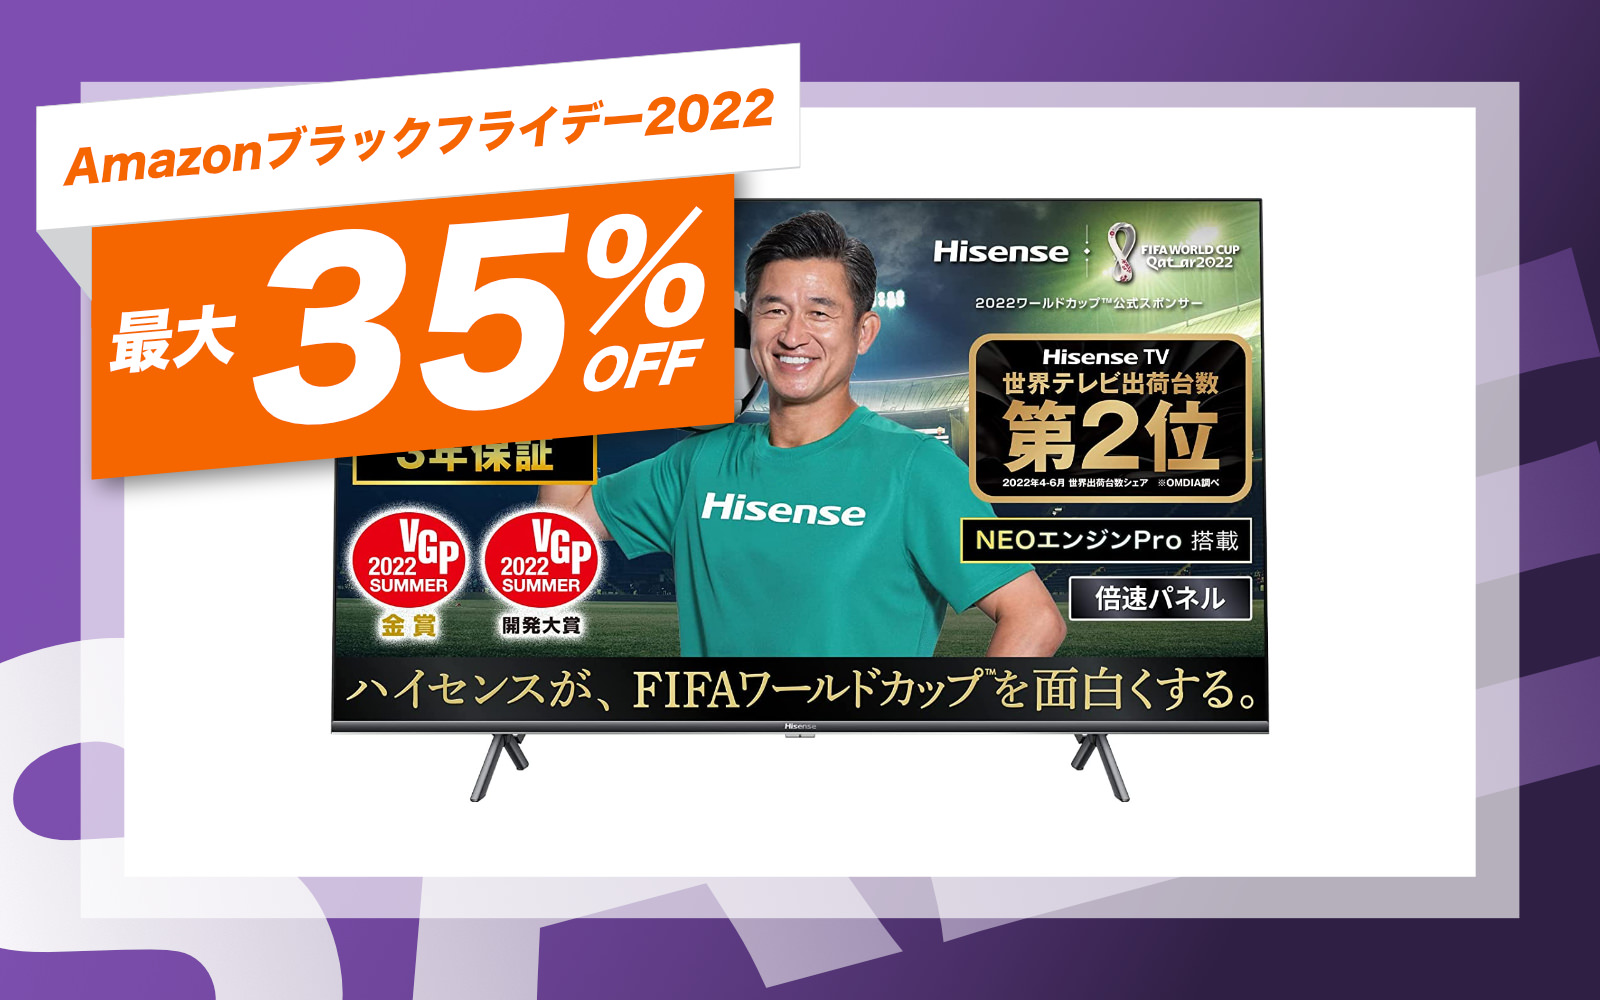 Hisense tv on Amazon Black Friday Sale 2022